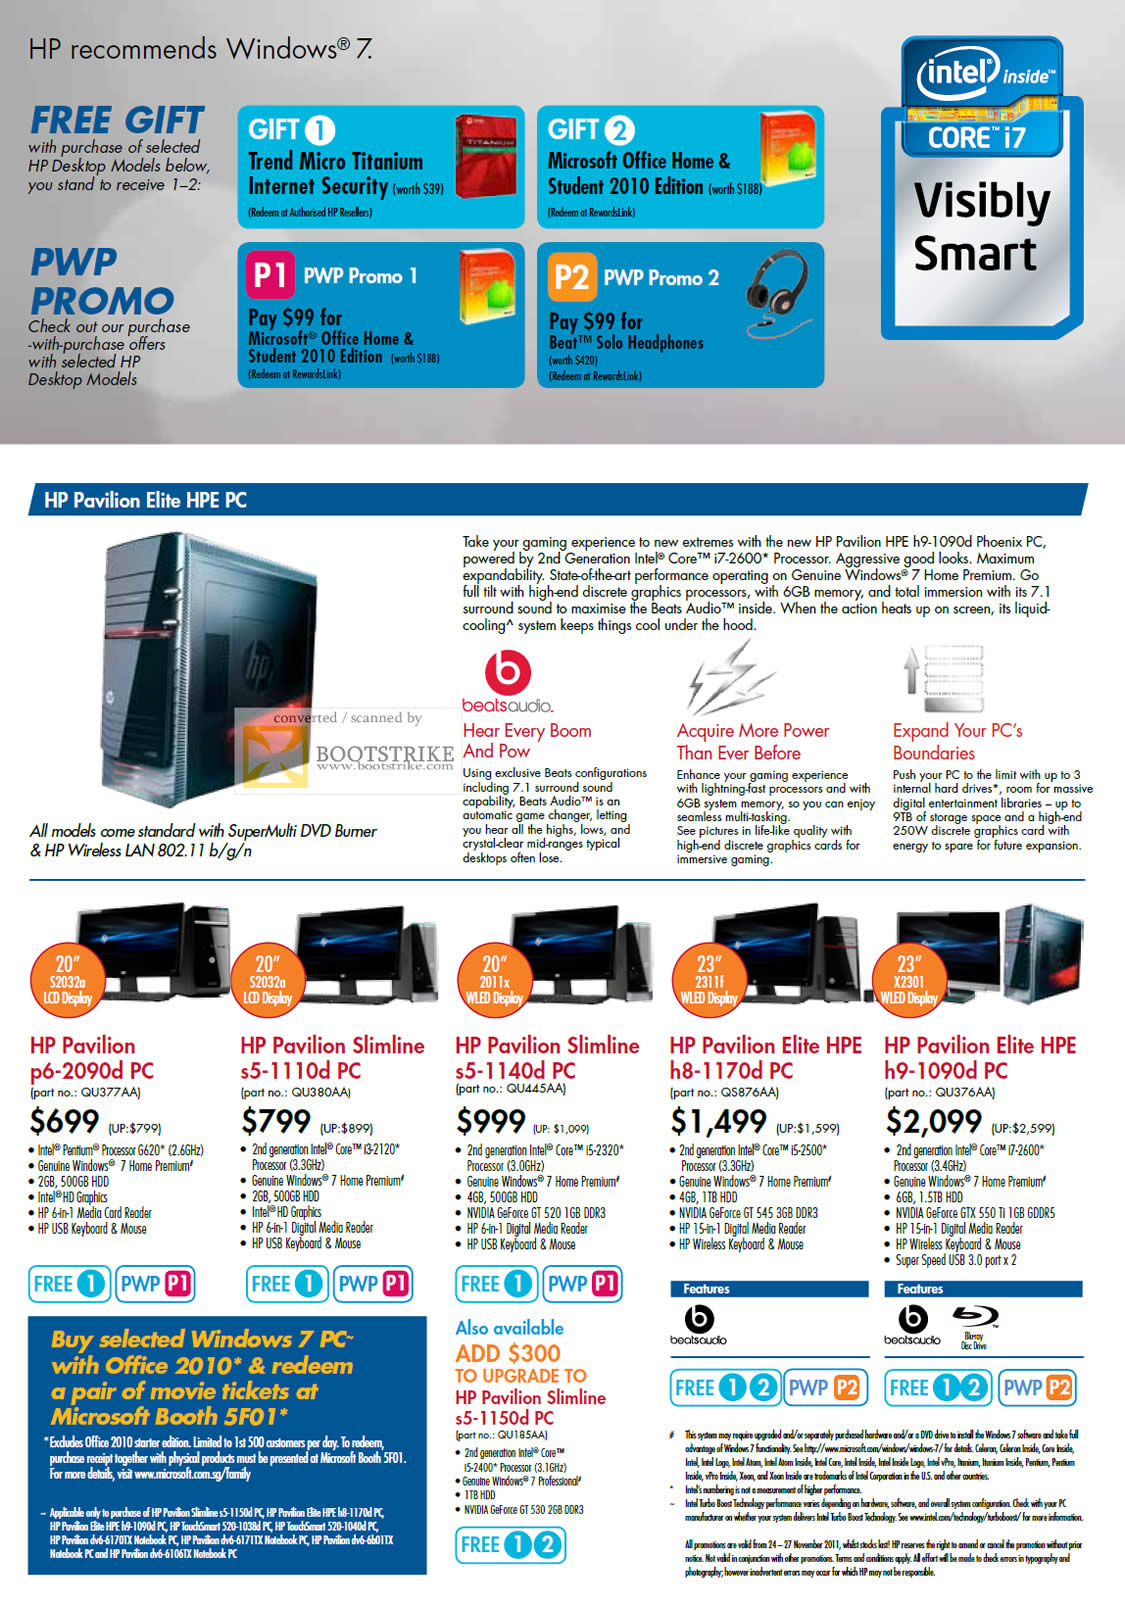 SITEX 2011 price list image brochure of HP Desktop PC Pavilion P6-2090D, Slimline S5-1110D, S5-1140D, S5-1150D, Elite HPE H8-1170D, H9-1090D